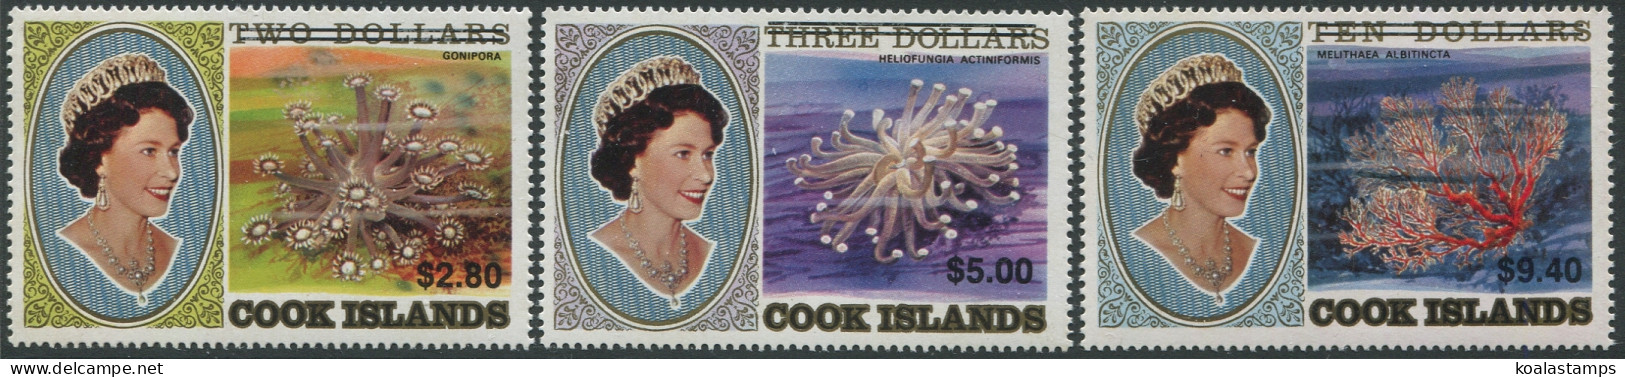 Cook Islands 1987 SG1150-1152 Corals High Values Ovpts Set MNH - Cook Islands